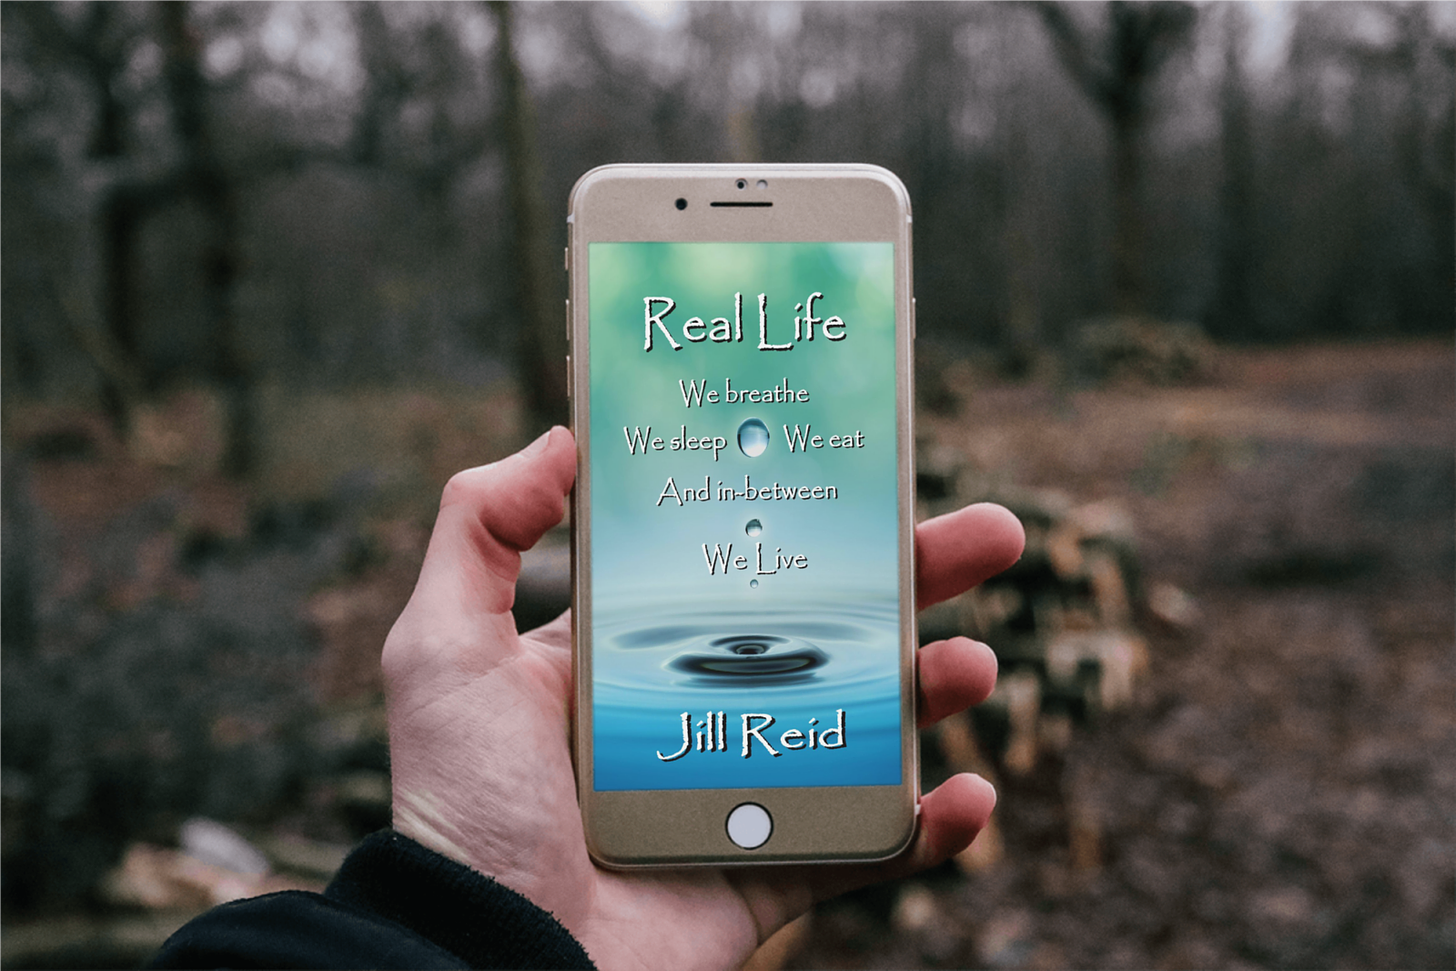 Real Life by Jill Reid